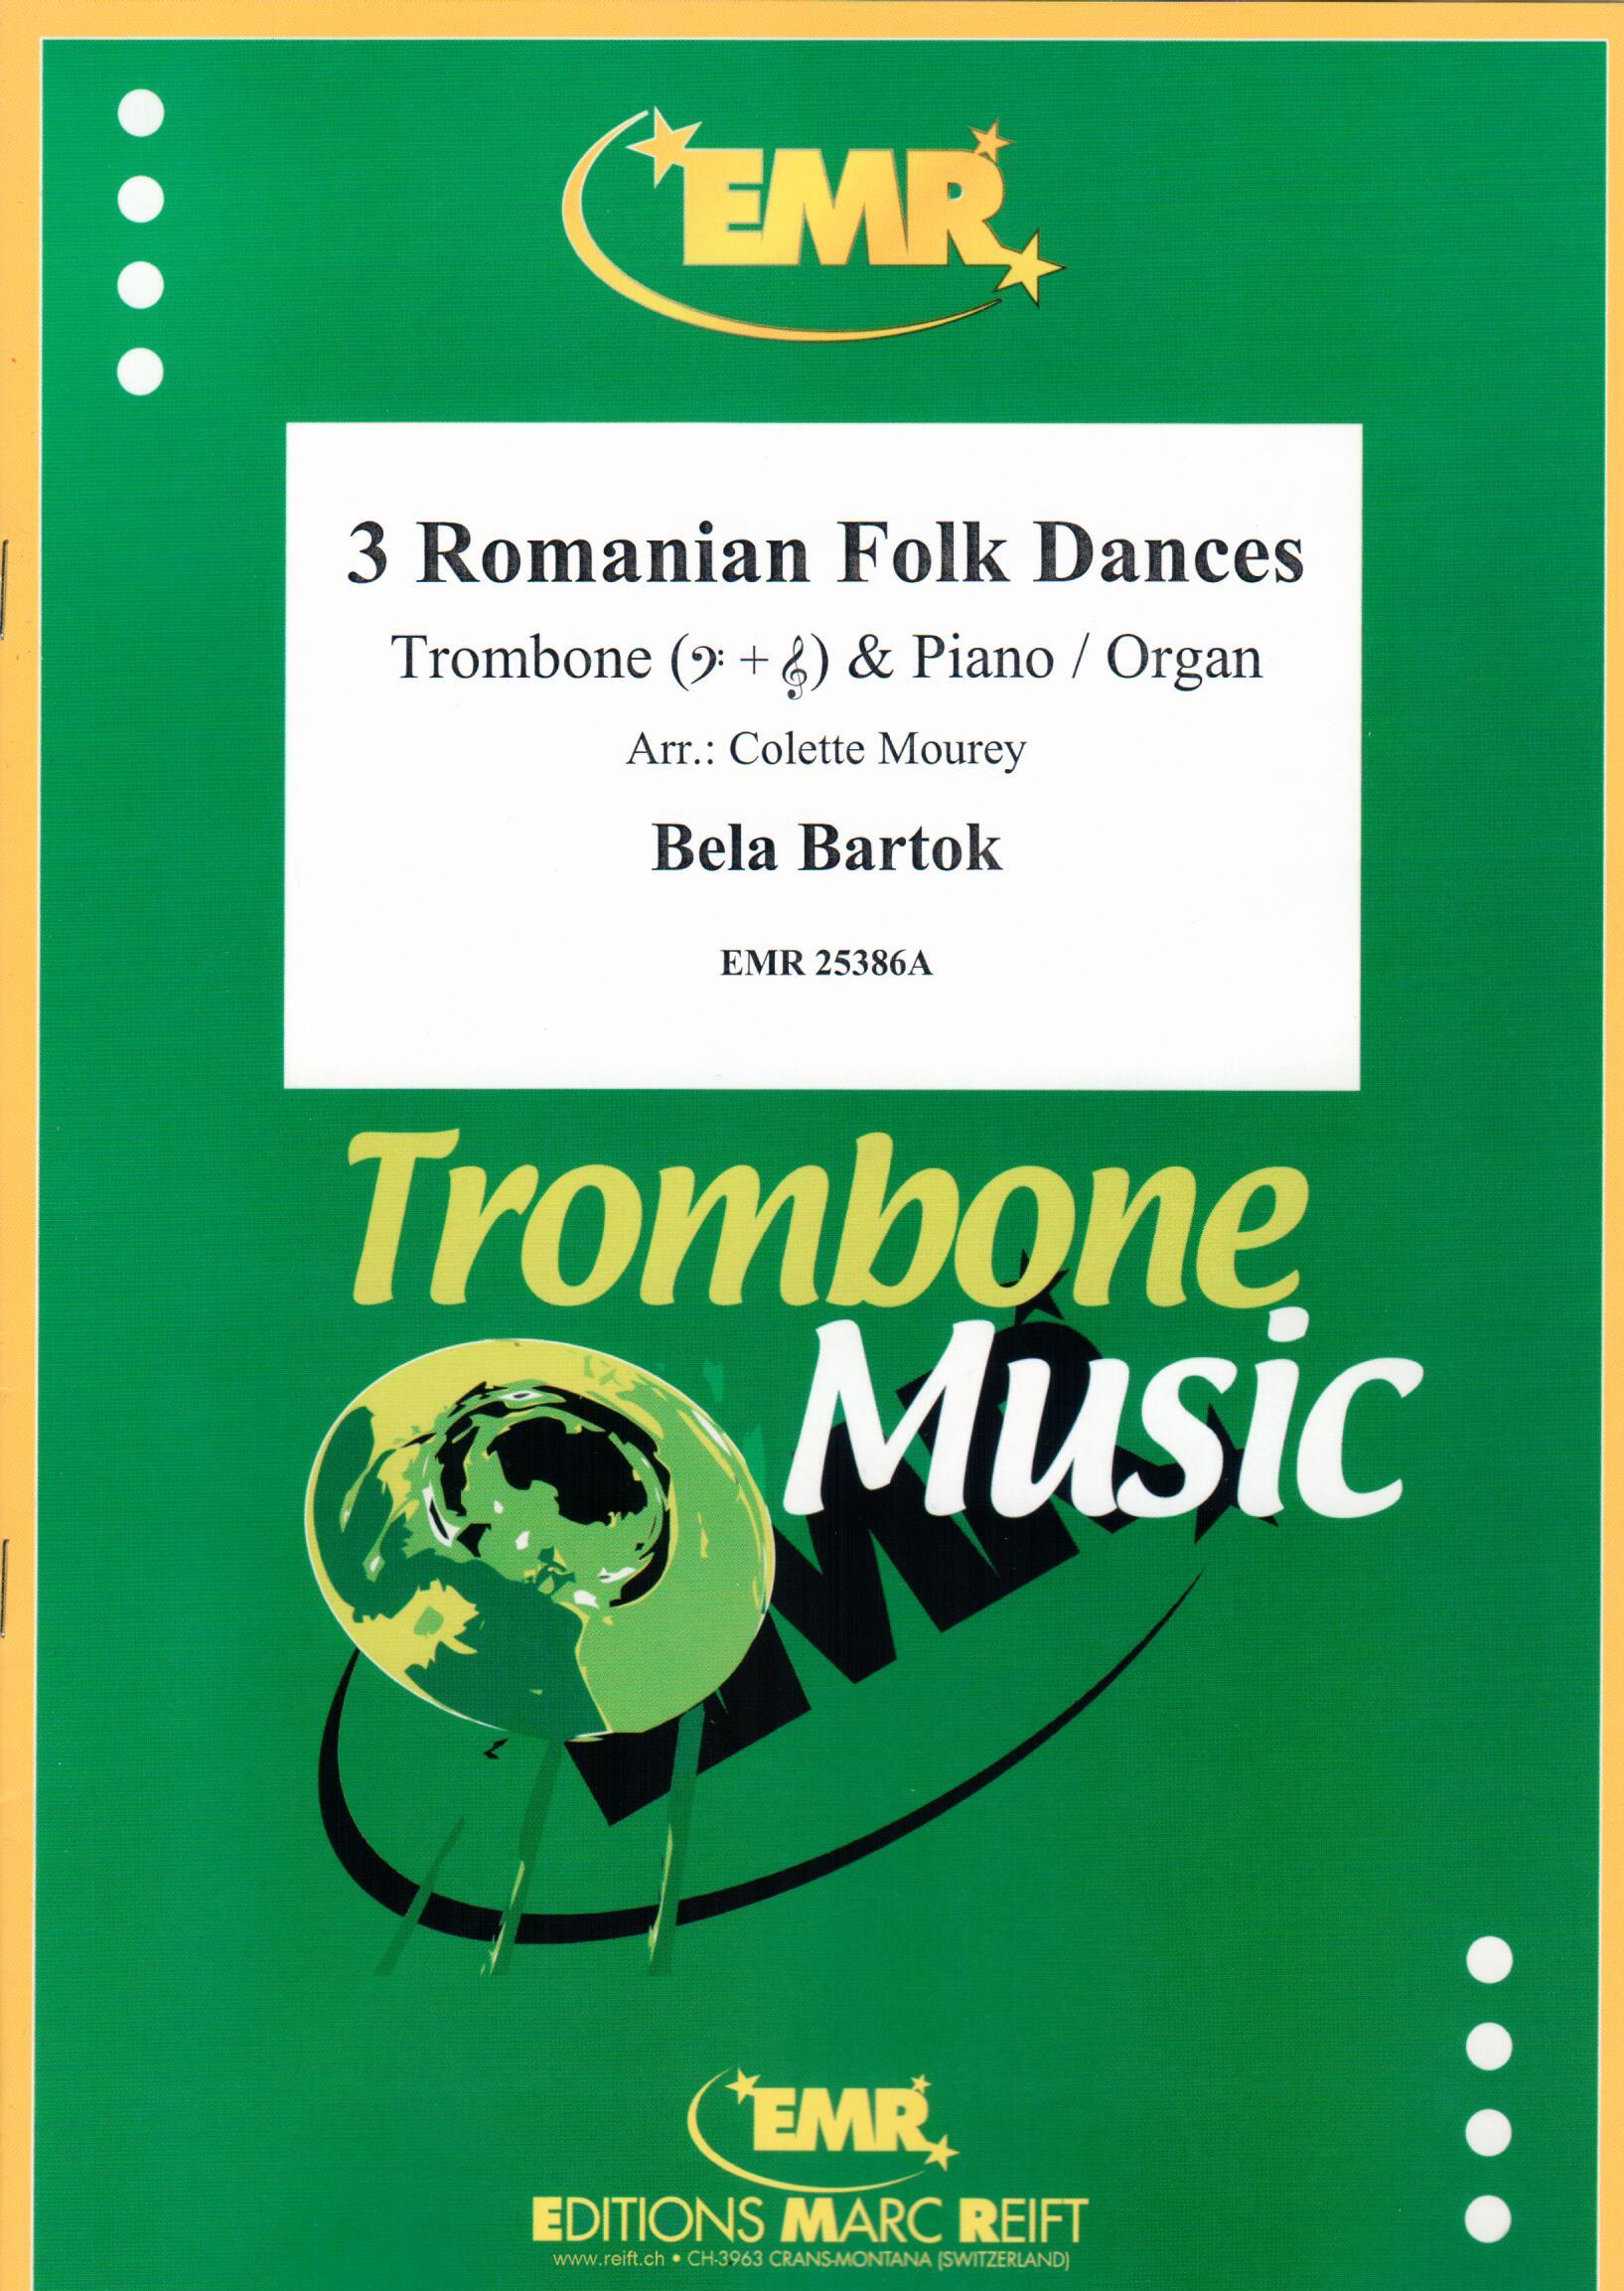 3 ROMANIAN FOLK DANCES, SOLOS - Trombone